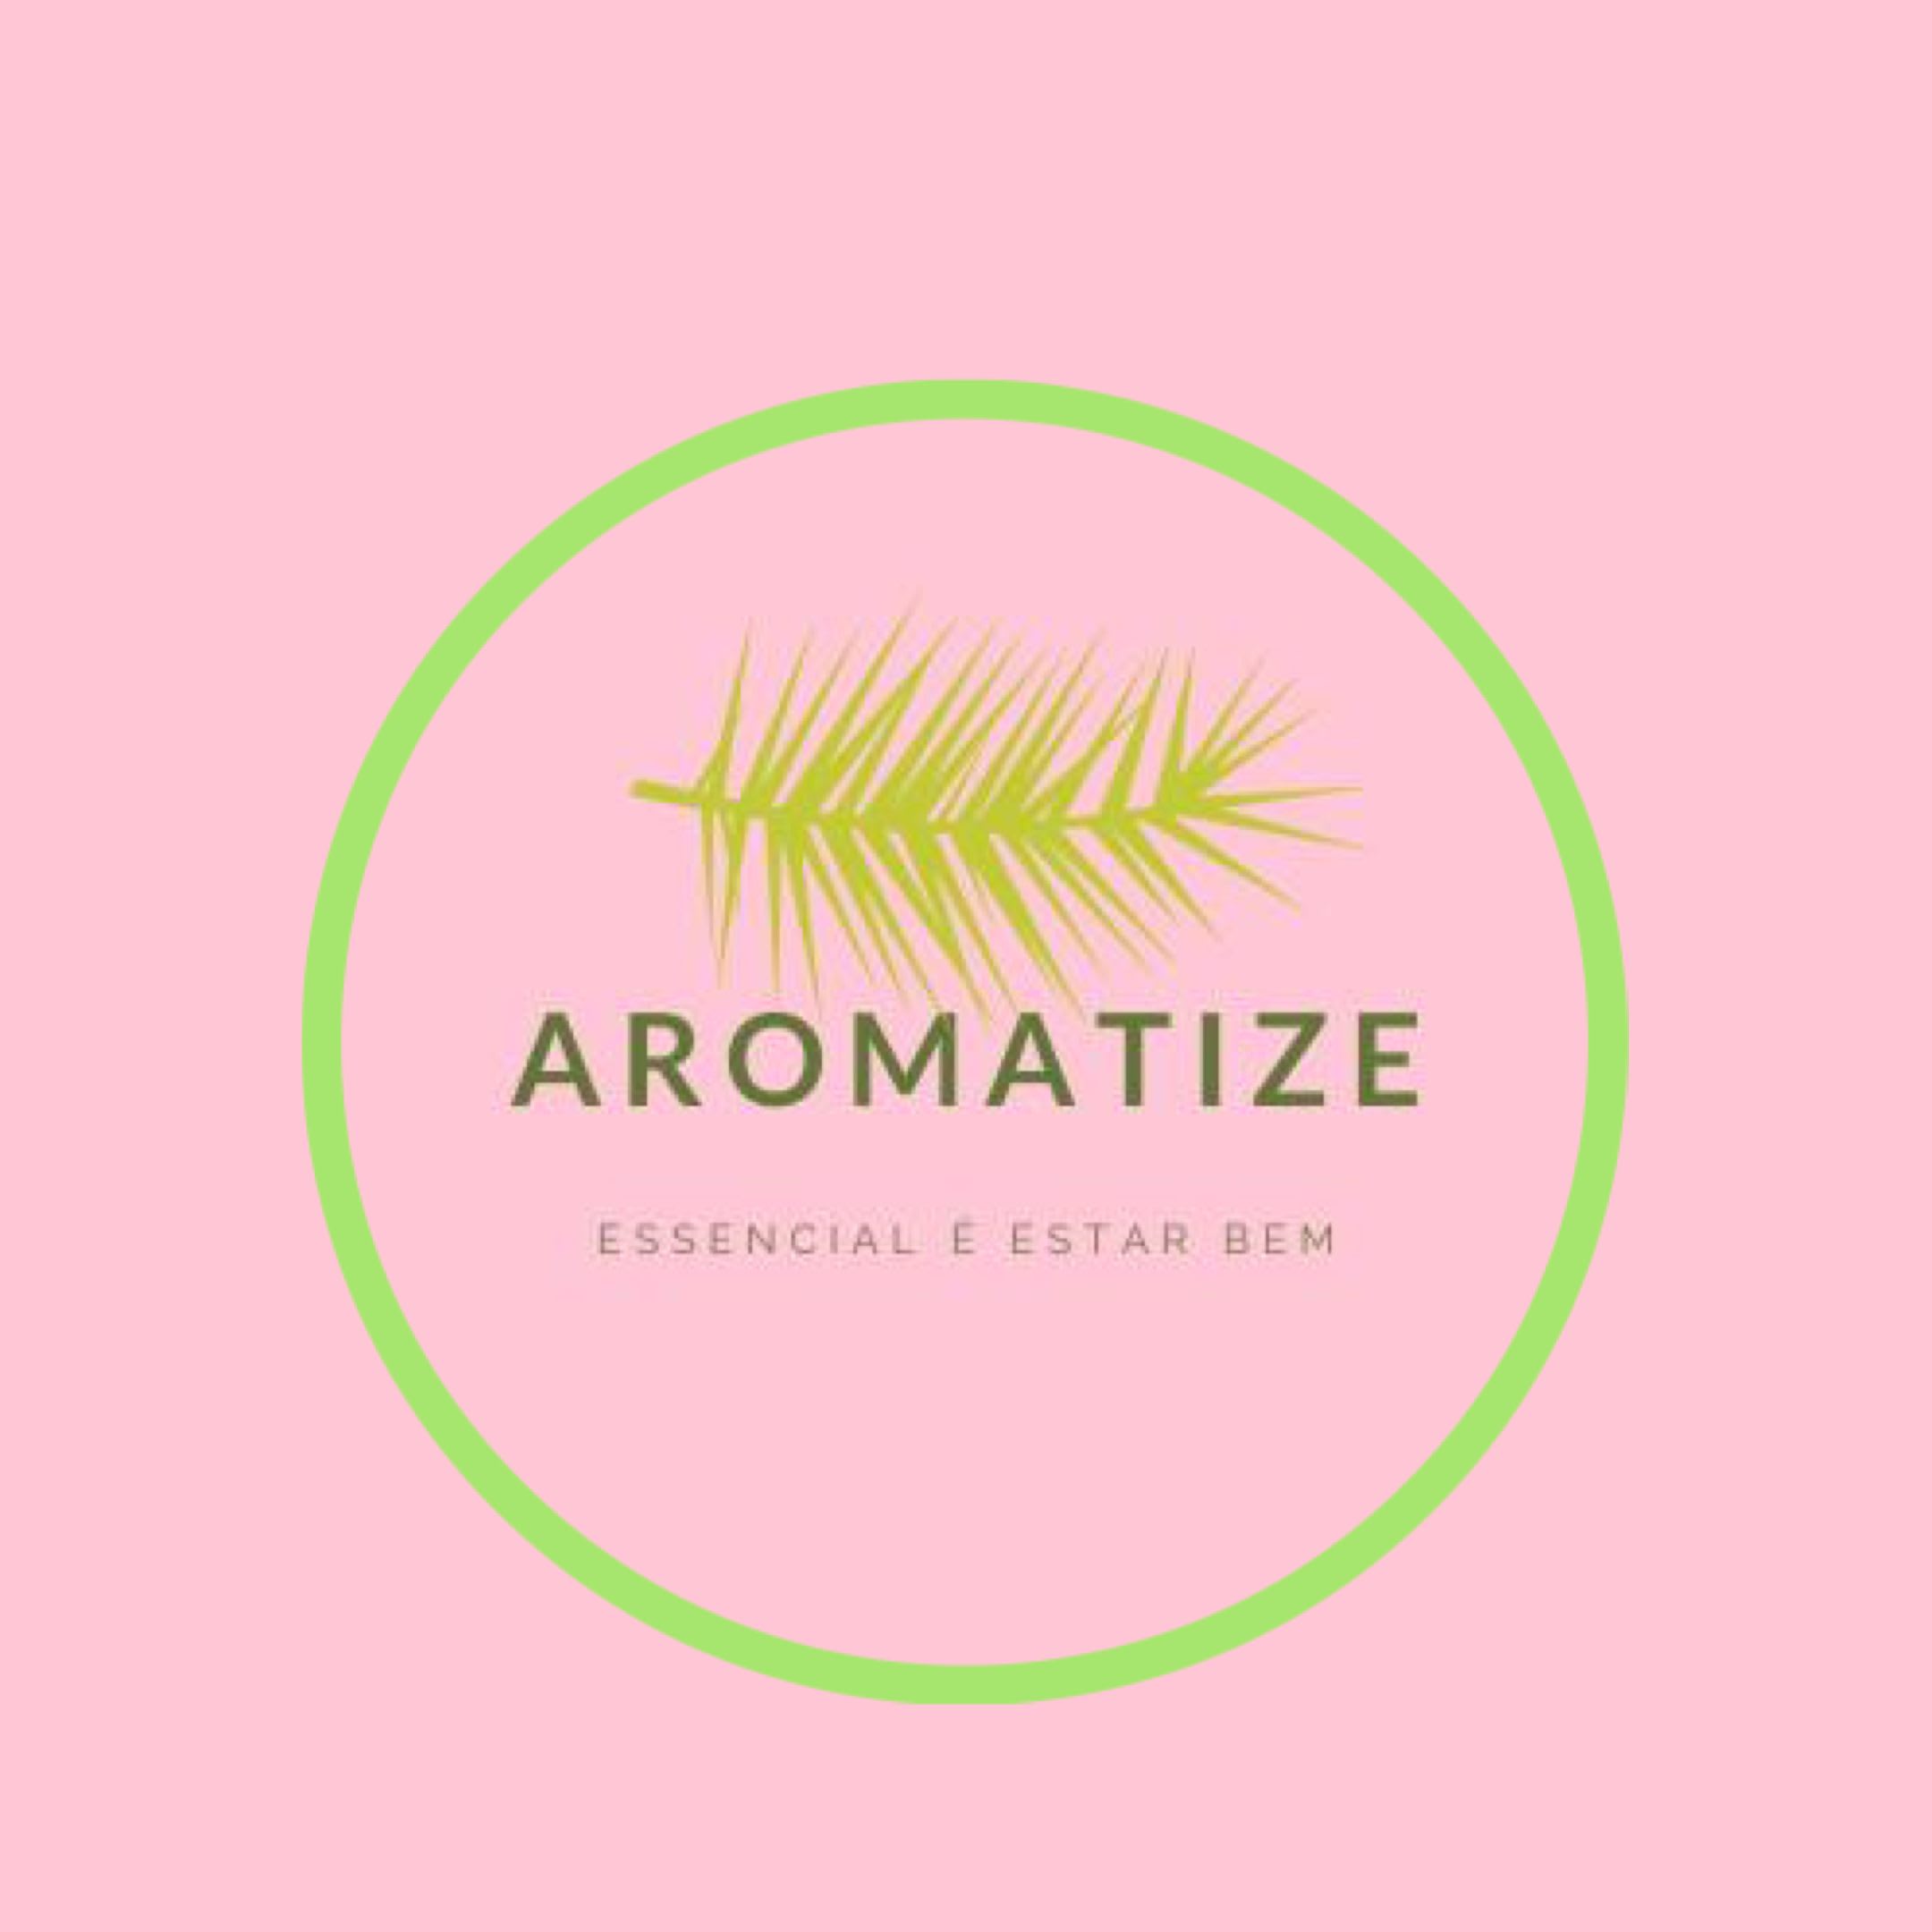 Aromatize